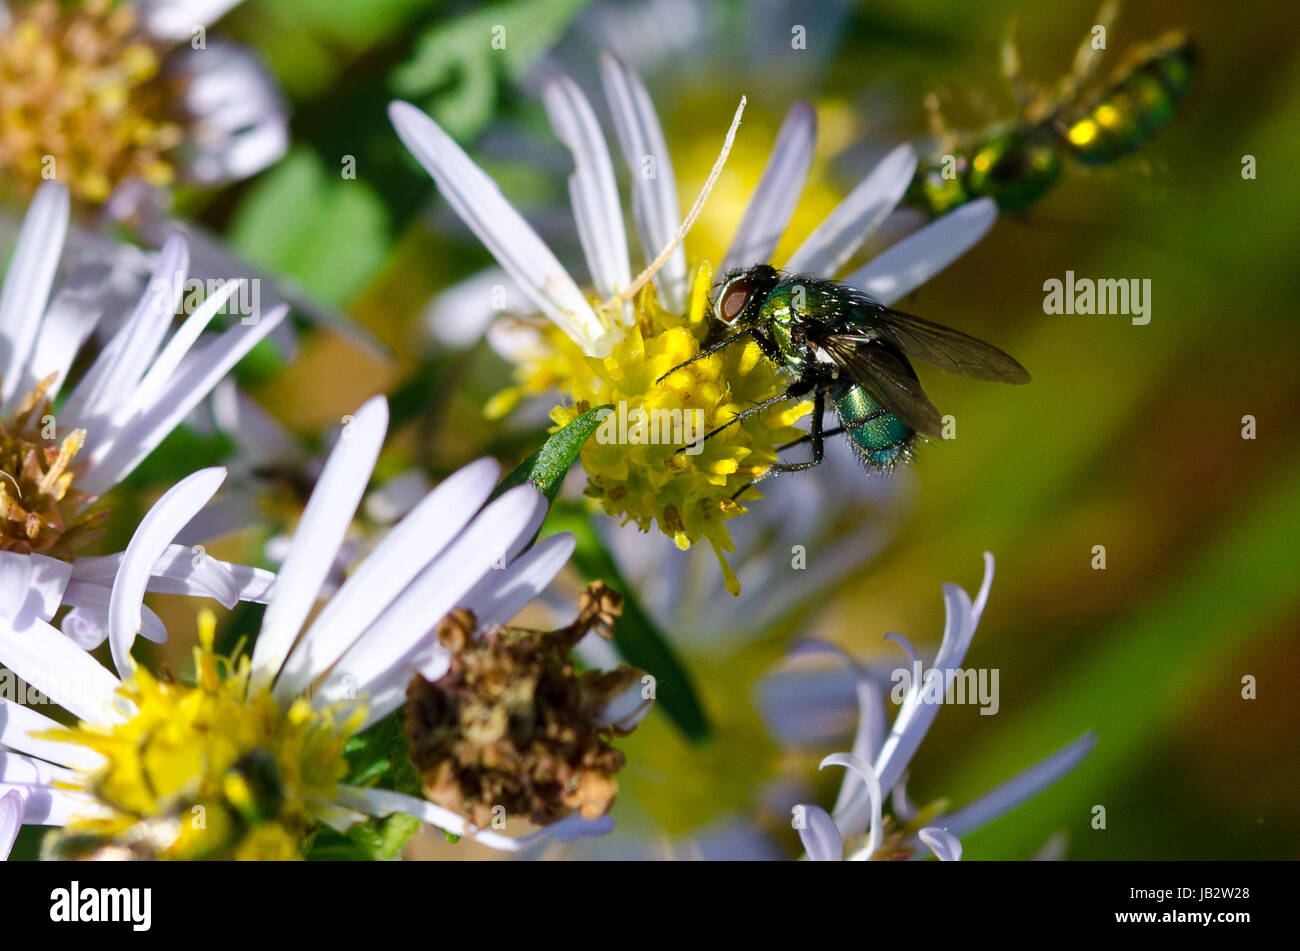 Metallic Green Sweat Bee on Yellow and White Flower Stock Photo